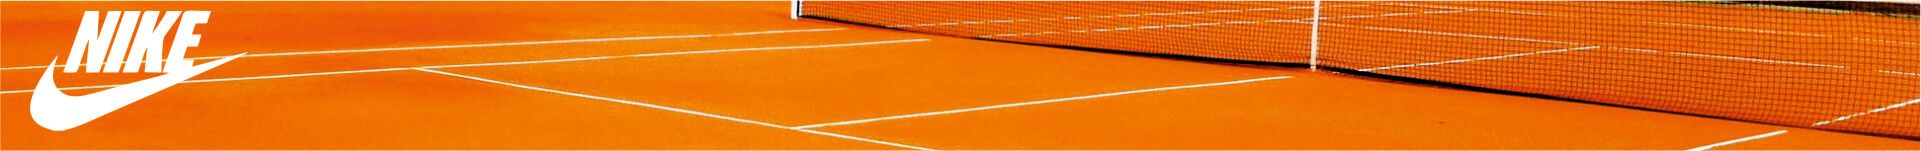 Scarpe Nike - Tennis Corner